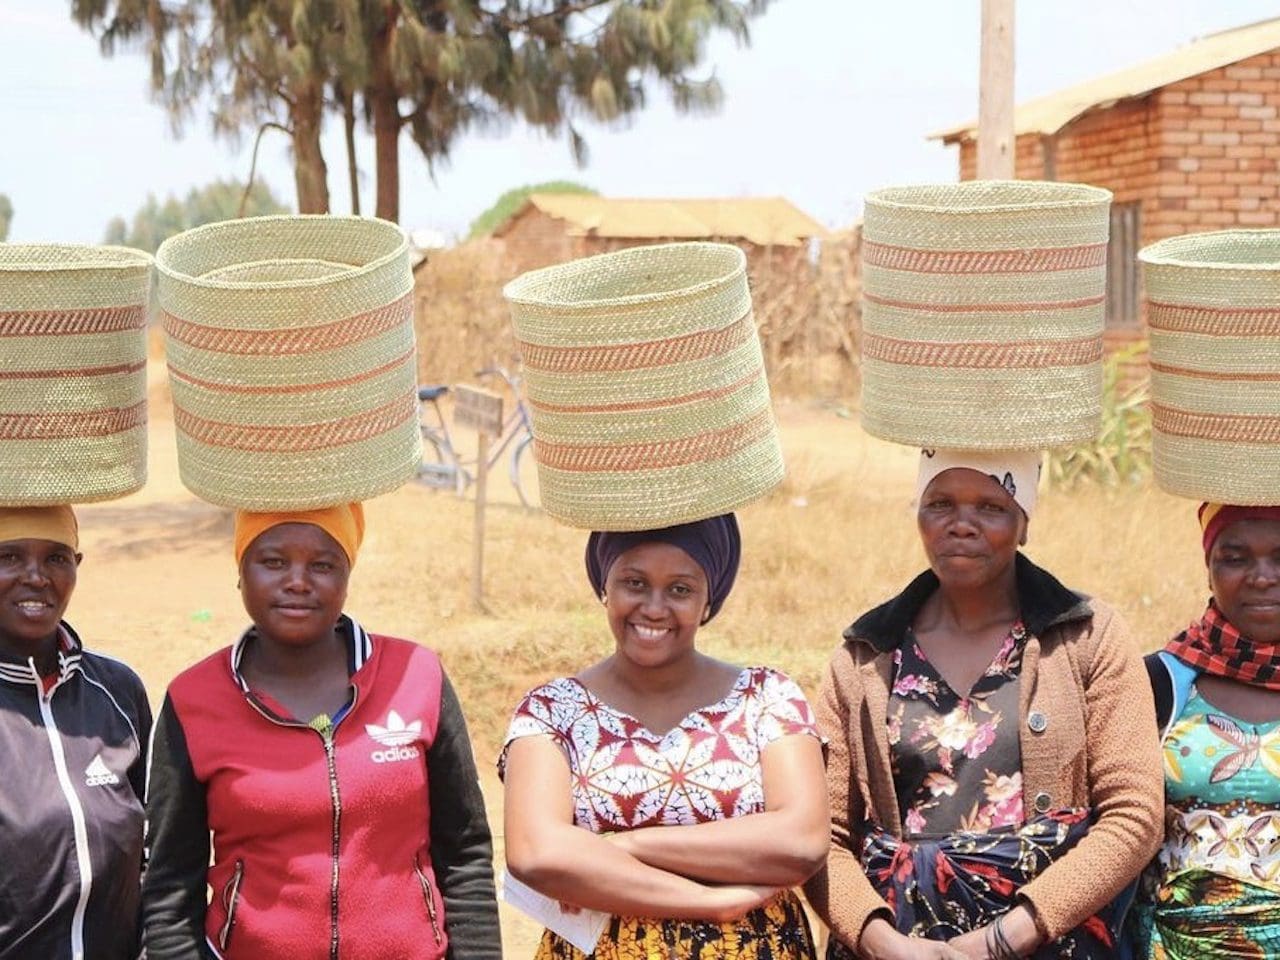 Empowering Tanzanias rural women through their craft